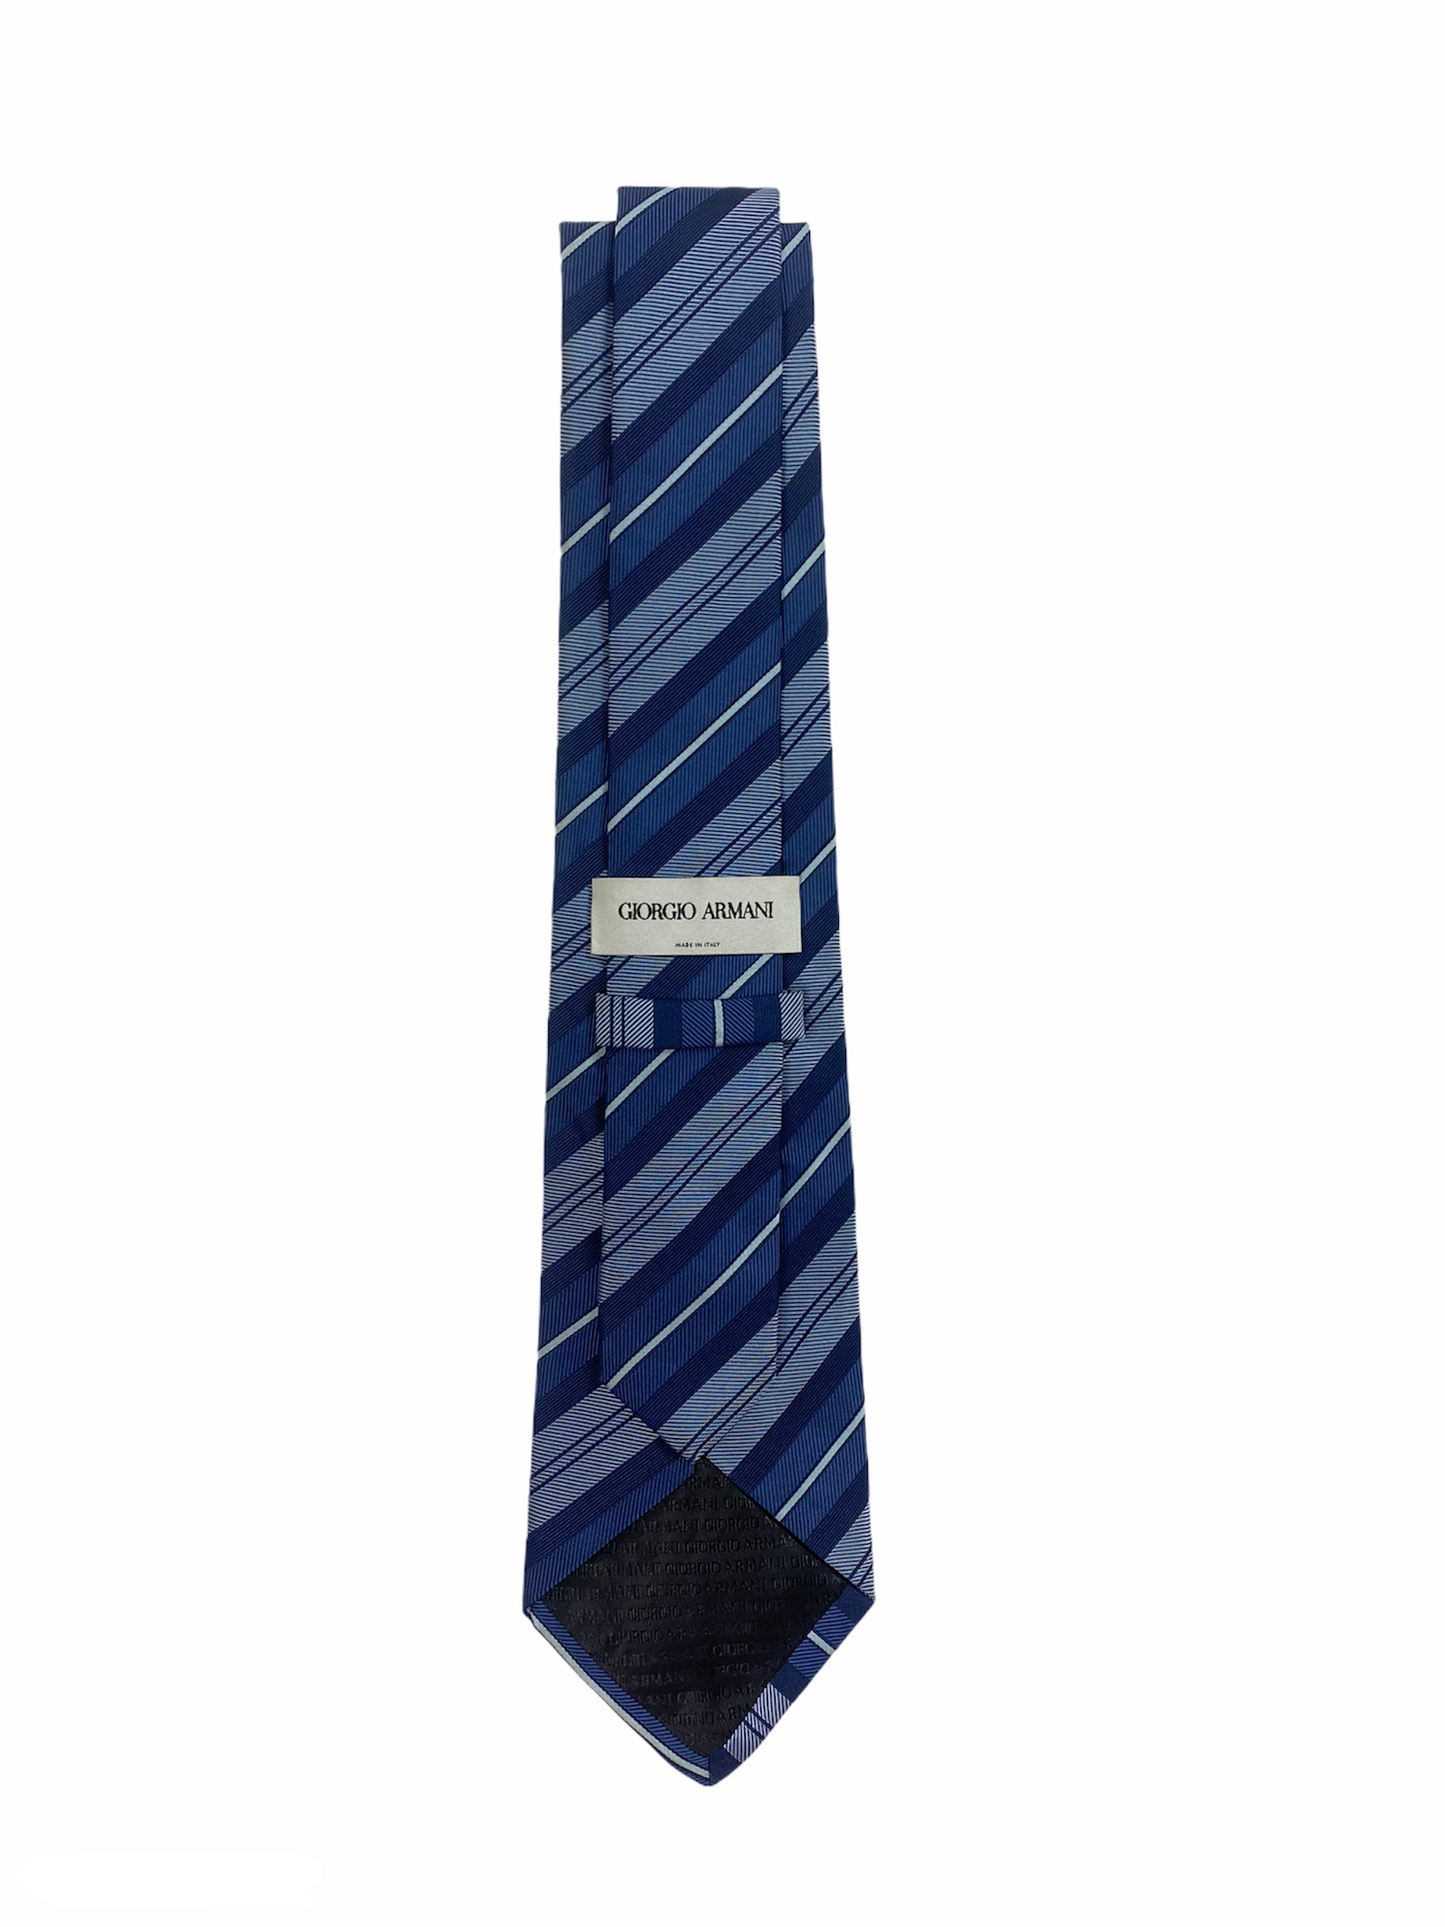 Cravate Giorgio Armani bleu